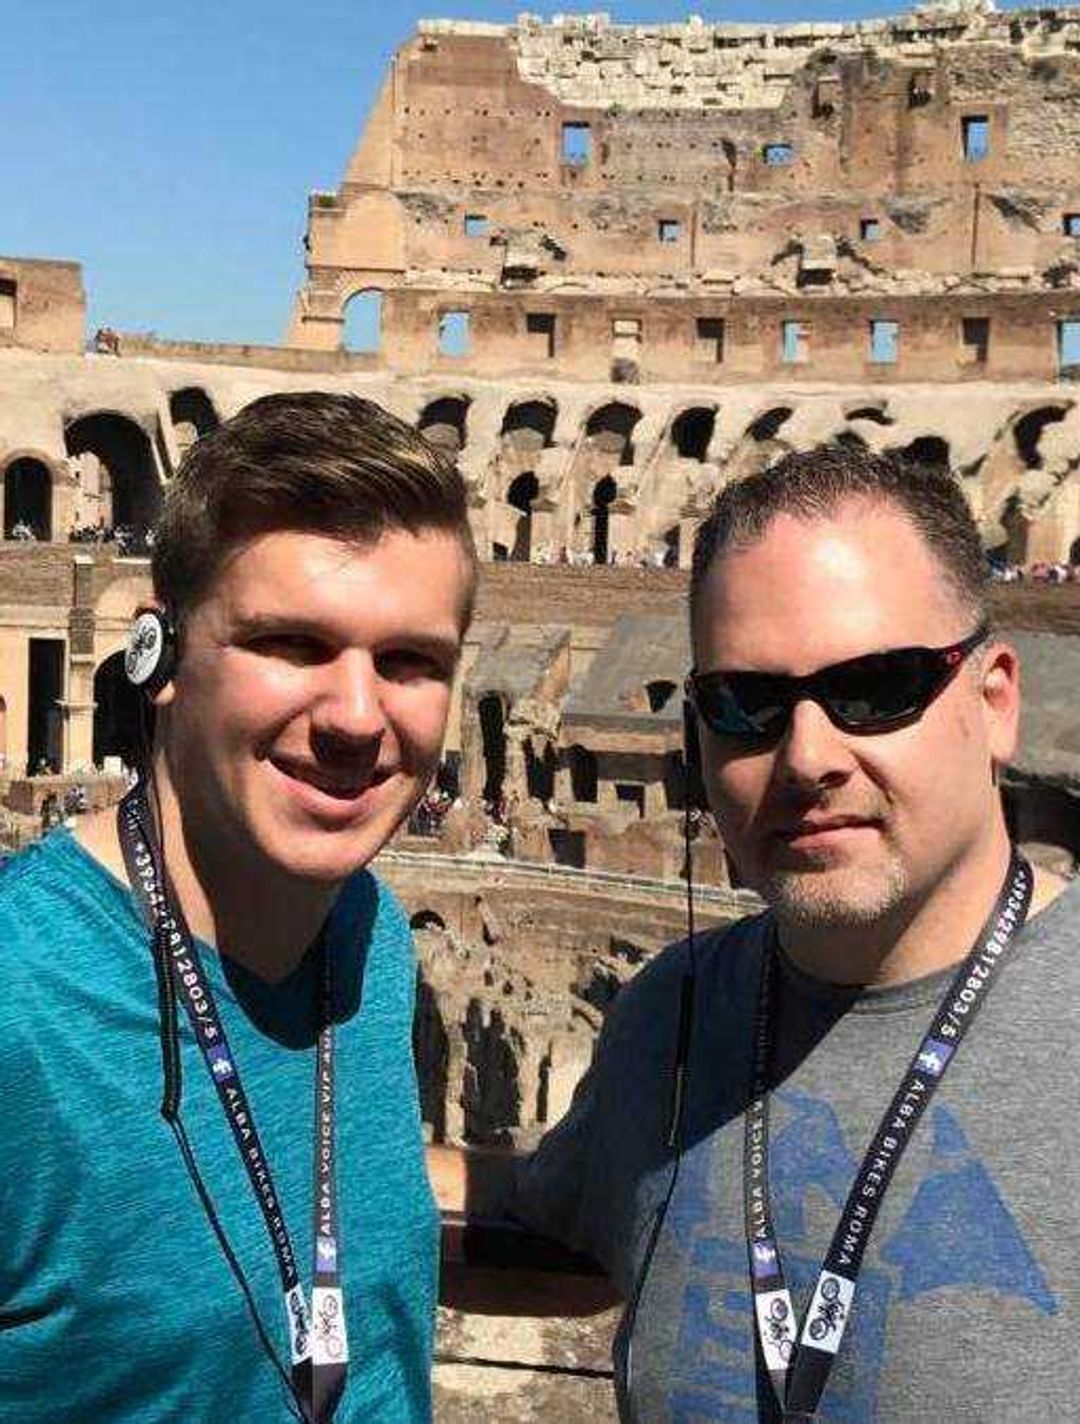 Jordan Redd and mentor Nicholas Kenney at the Colosseum.
